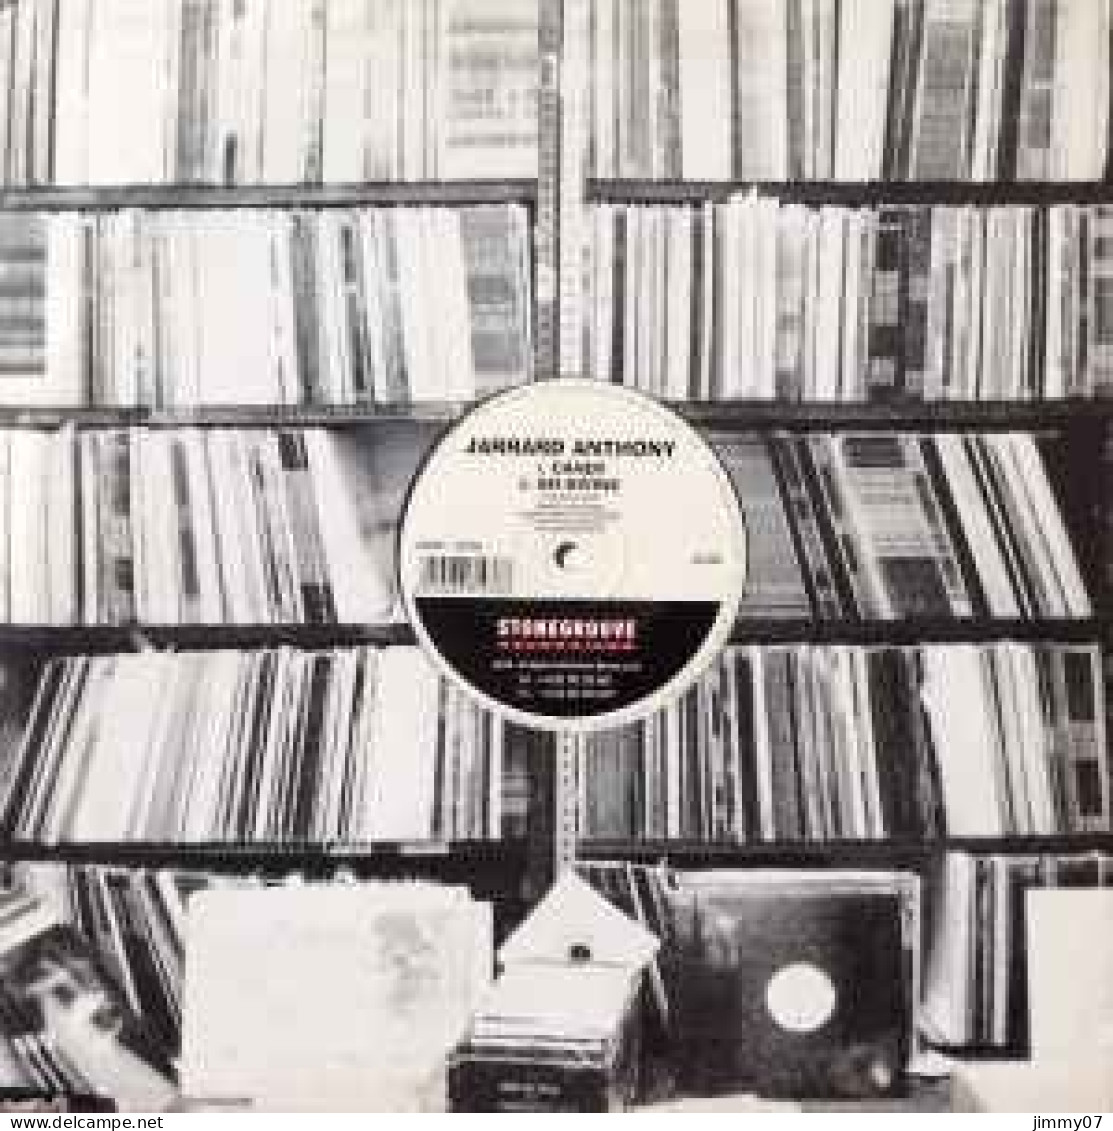 Jarrard Anthony - The Dream (12") - 45 T - Maxi-Single